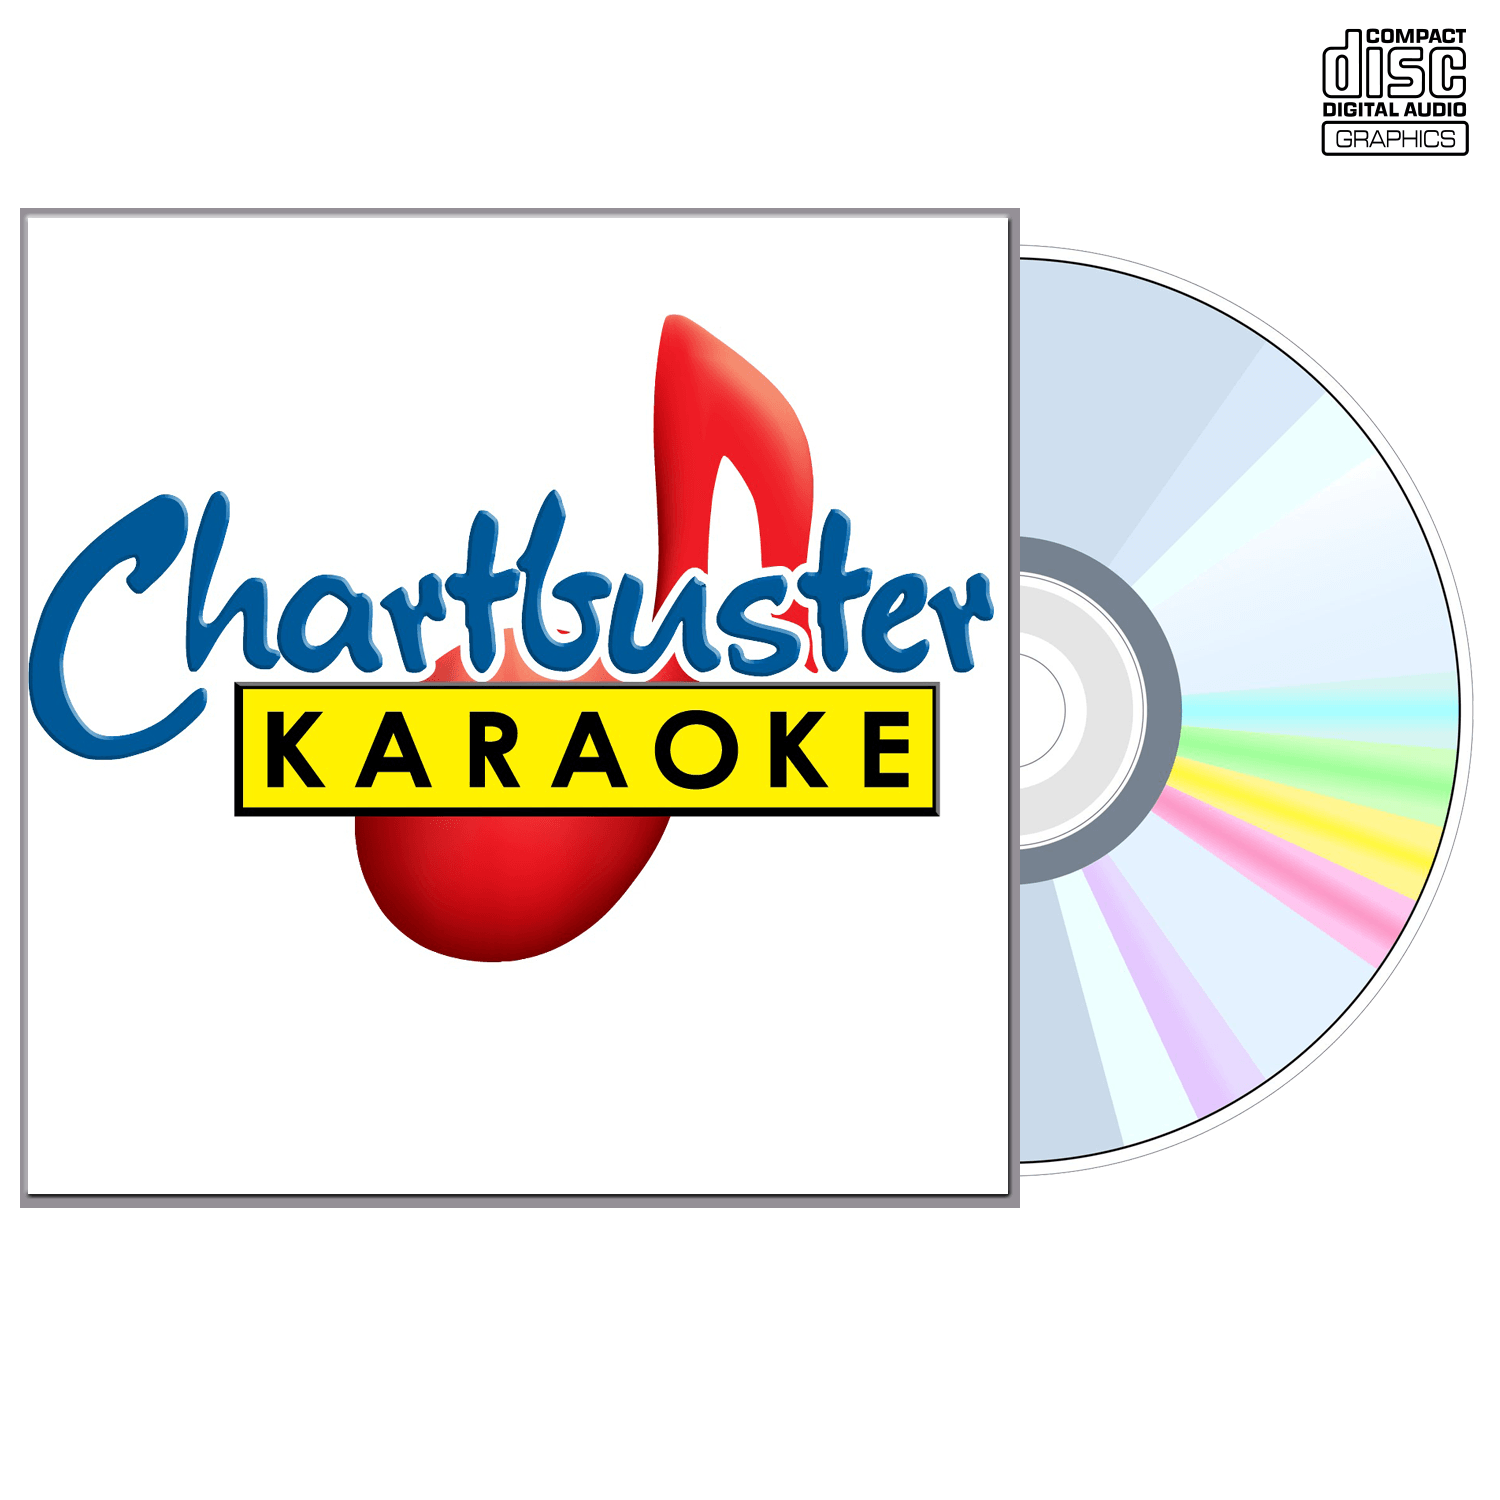 Dwight Yoakam Vol 2 - CD+G - Chartbuster Karaoke - Karaoke Home Entertainment